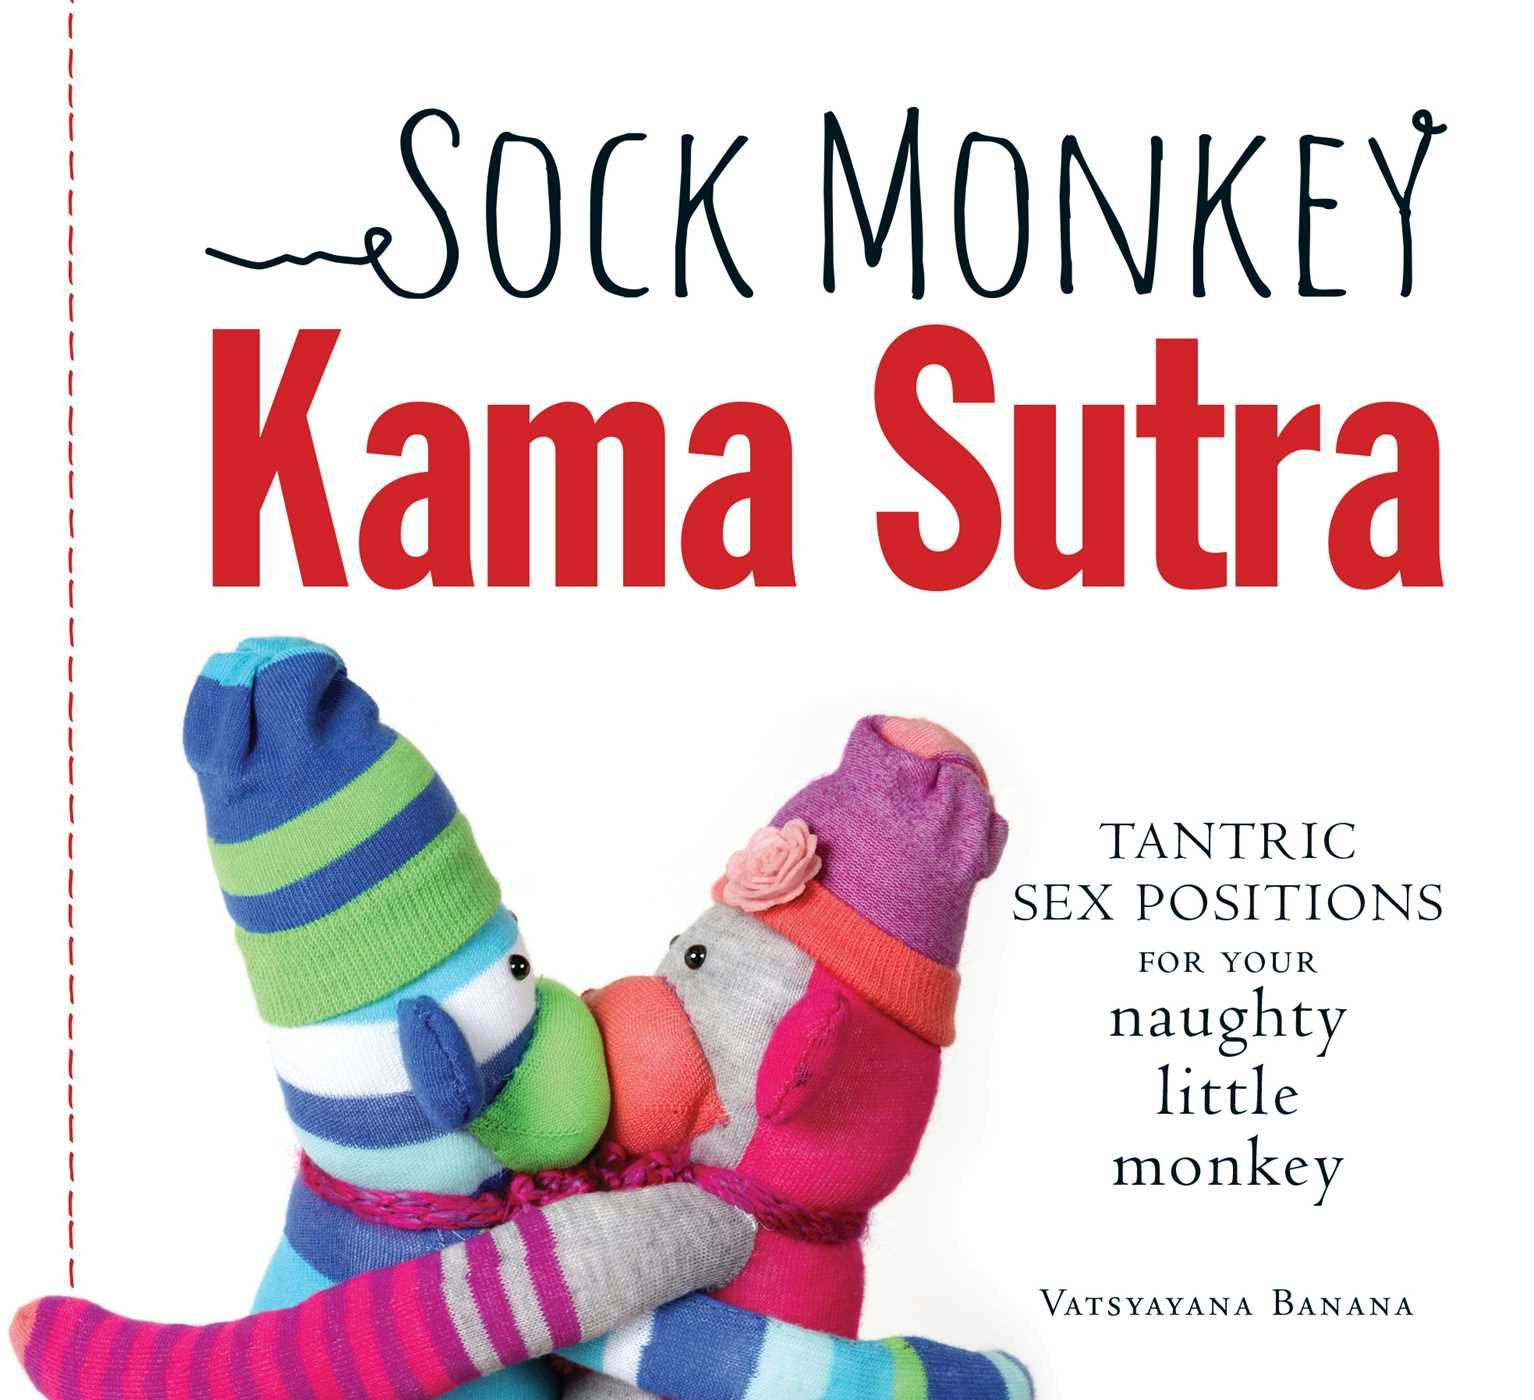 Sock Monkey Kama Sutra: Tantric Sex Positions for Your Naughty Little Monkey - Vatsyayana Banana